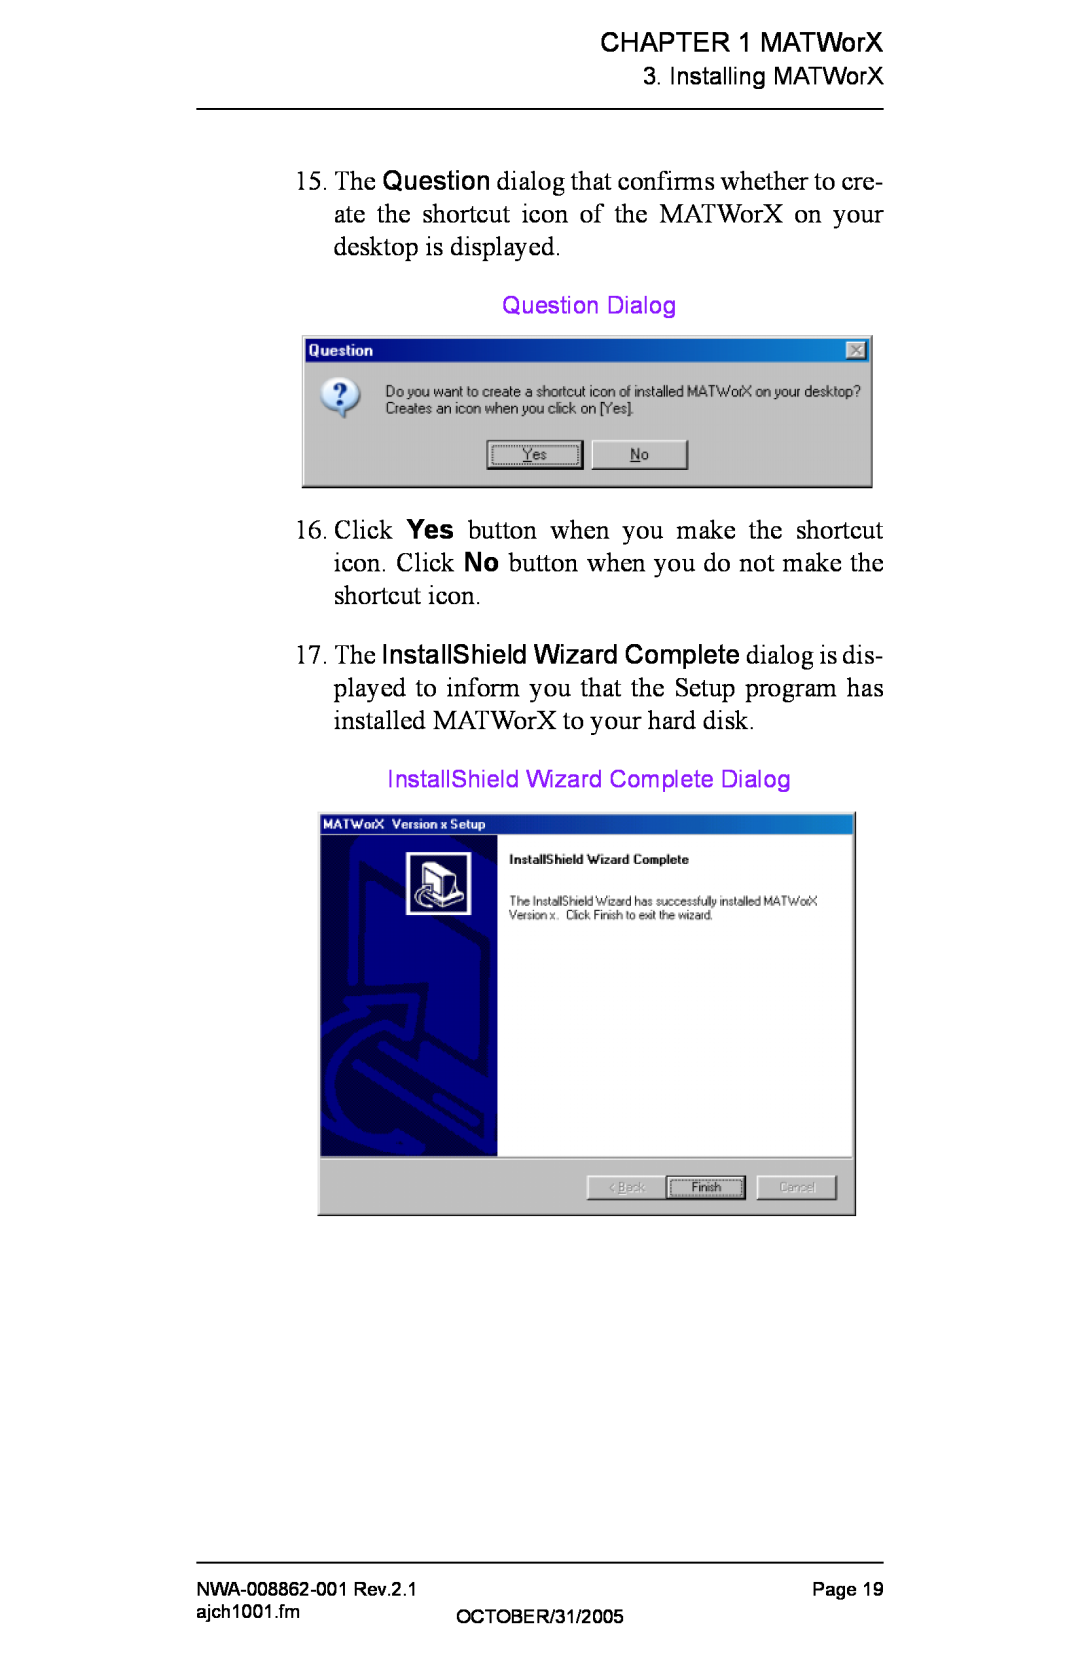 NEC NWA-008862-001 manual Question Dialog, InstallShield Wizard Complete Dialog 